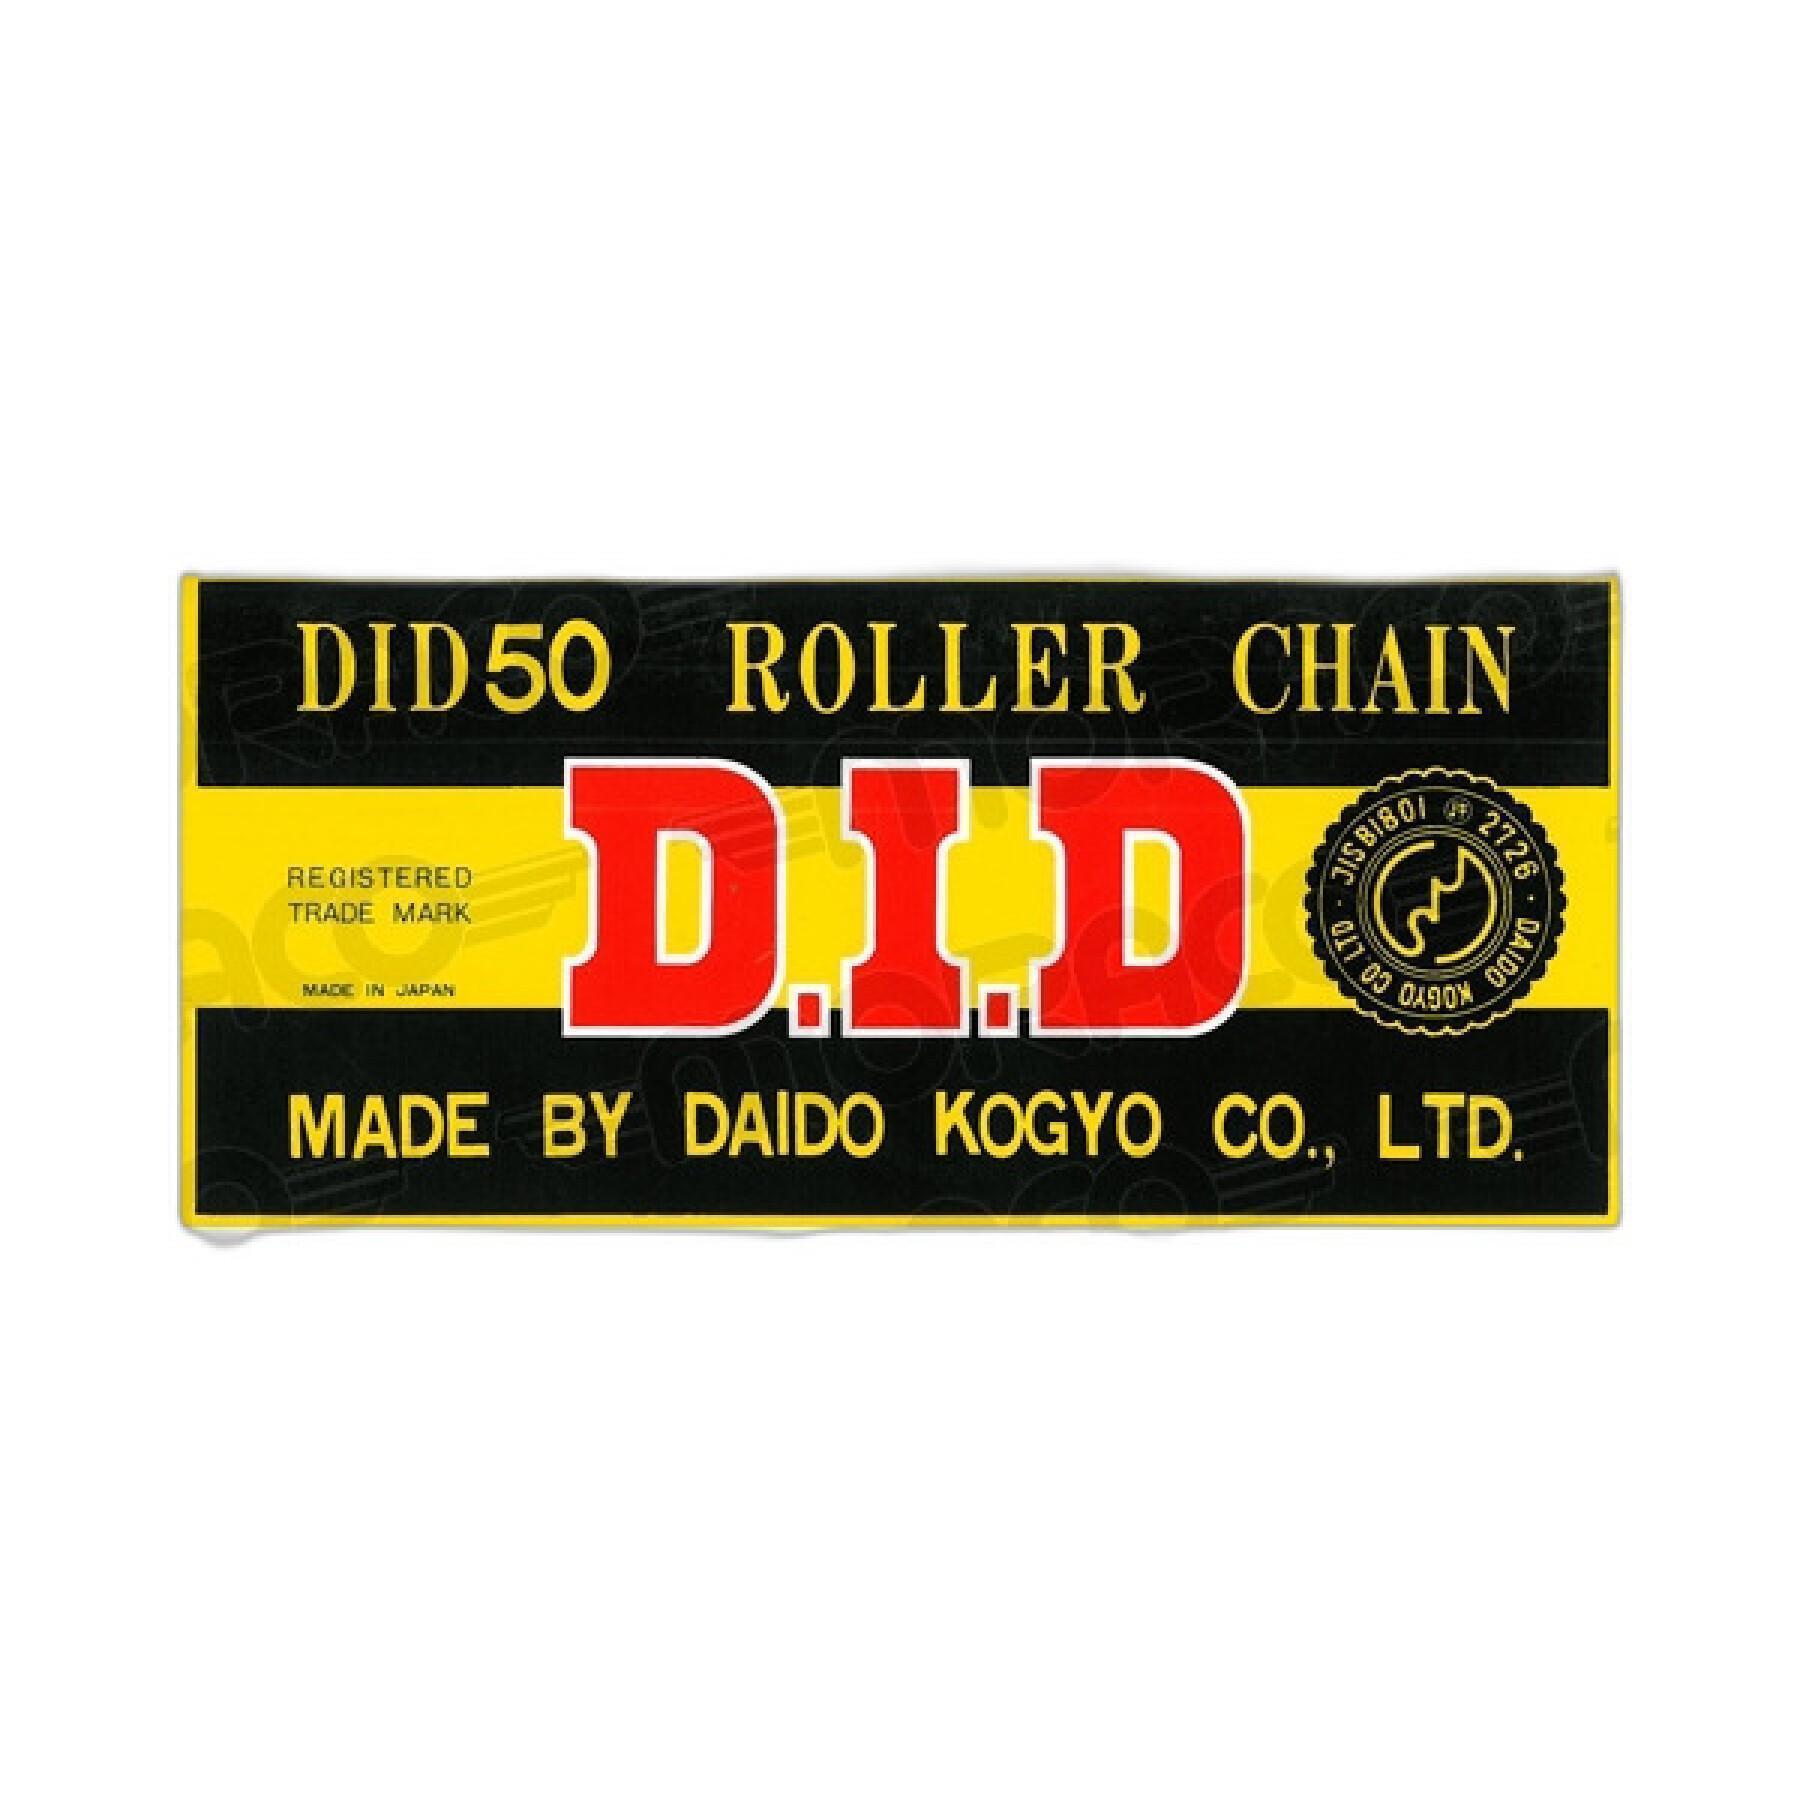 Motorcycle chain D.I.D 530 (B&B) RJ